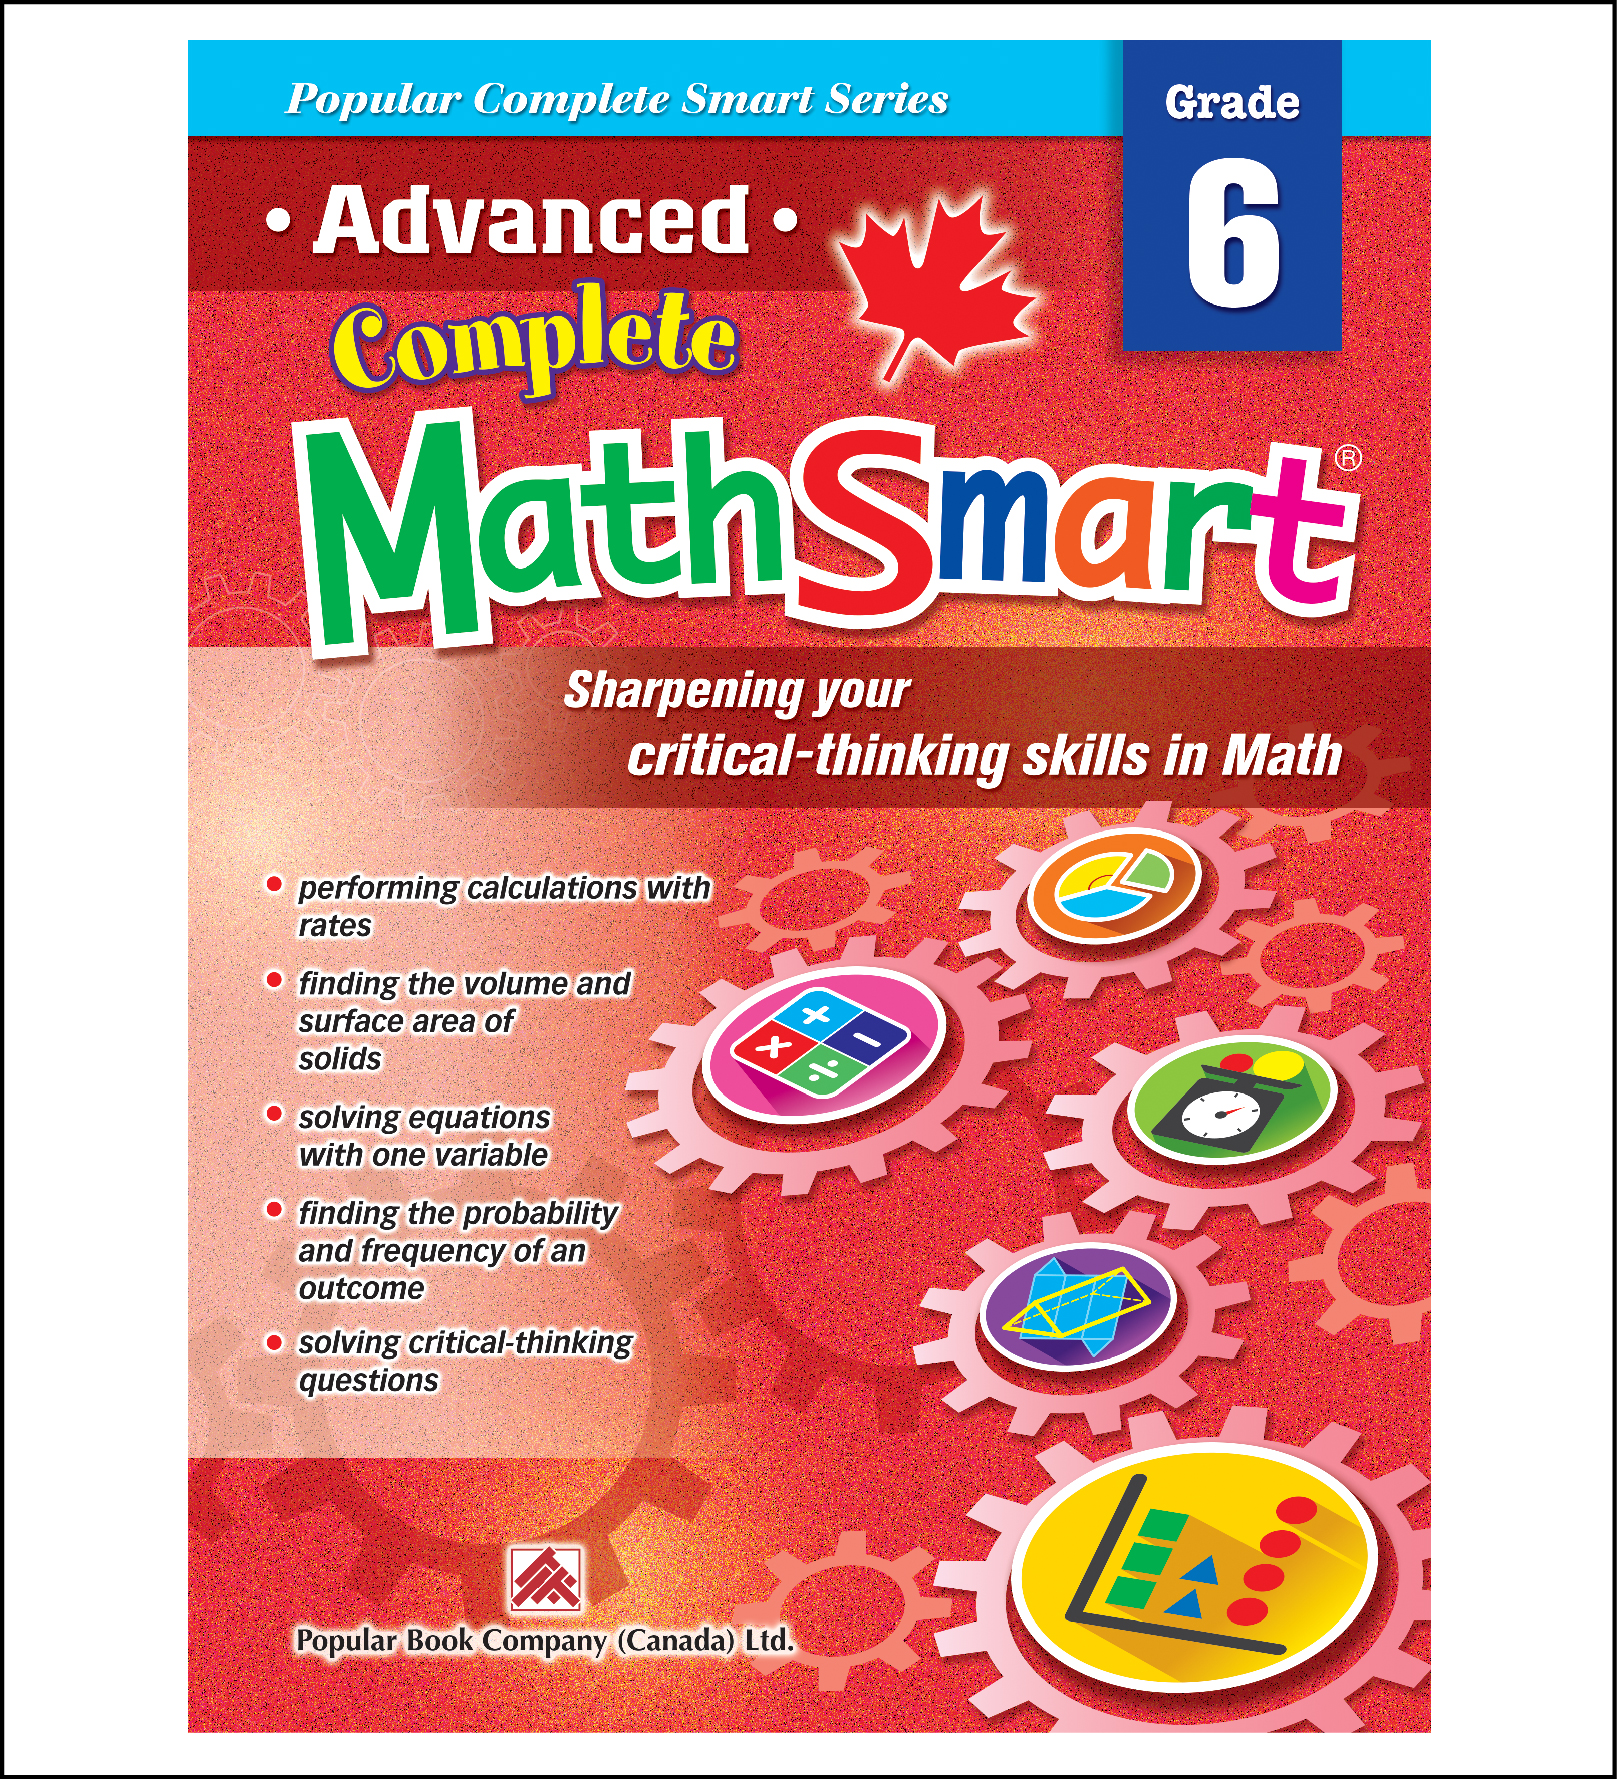 advanced-complete-mathsmart-grade-6-popular-book-company-canada-ltd